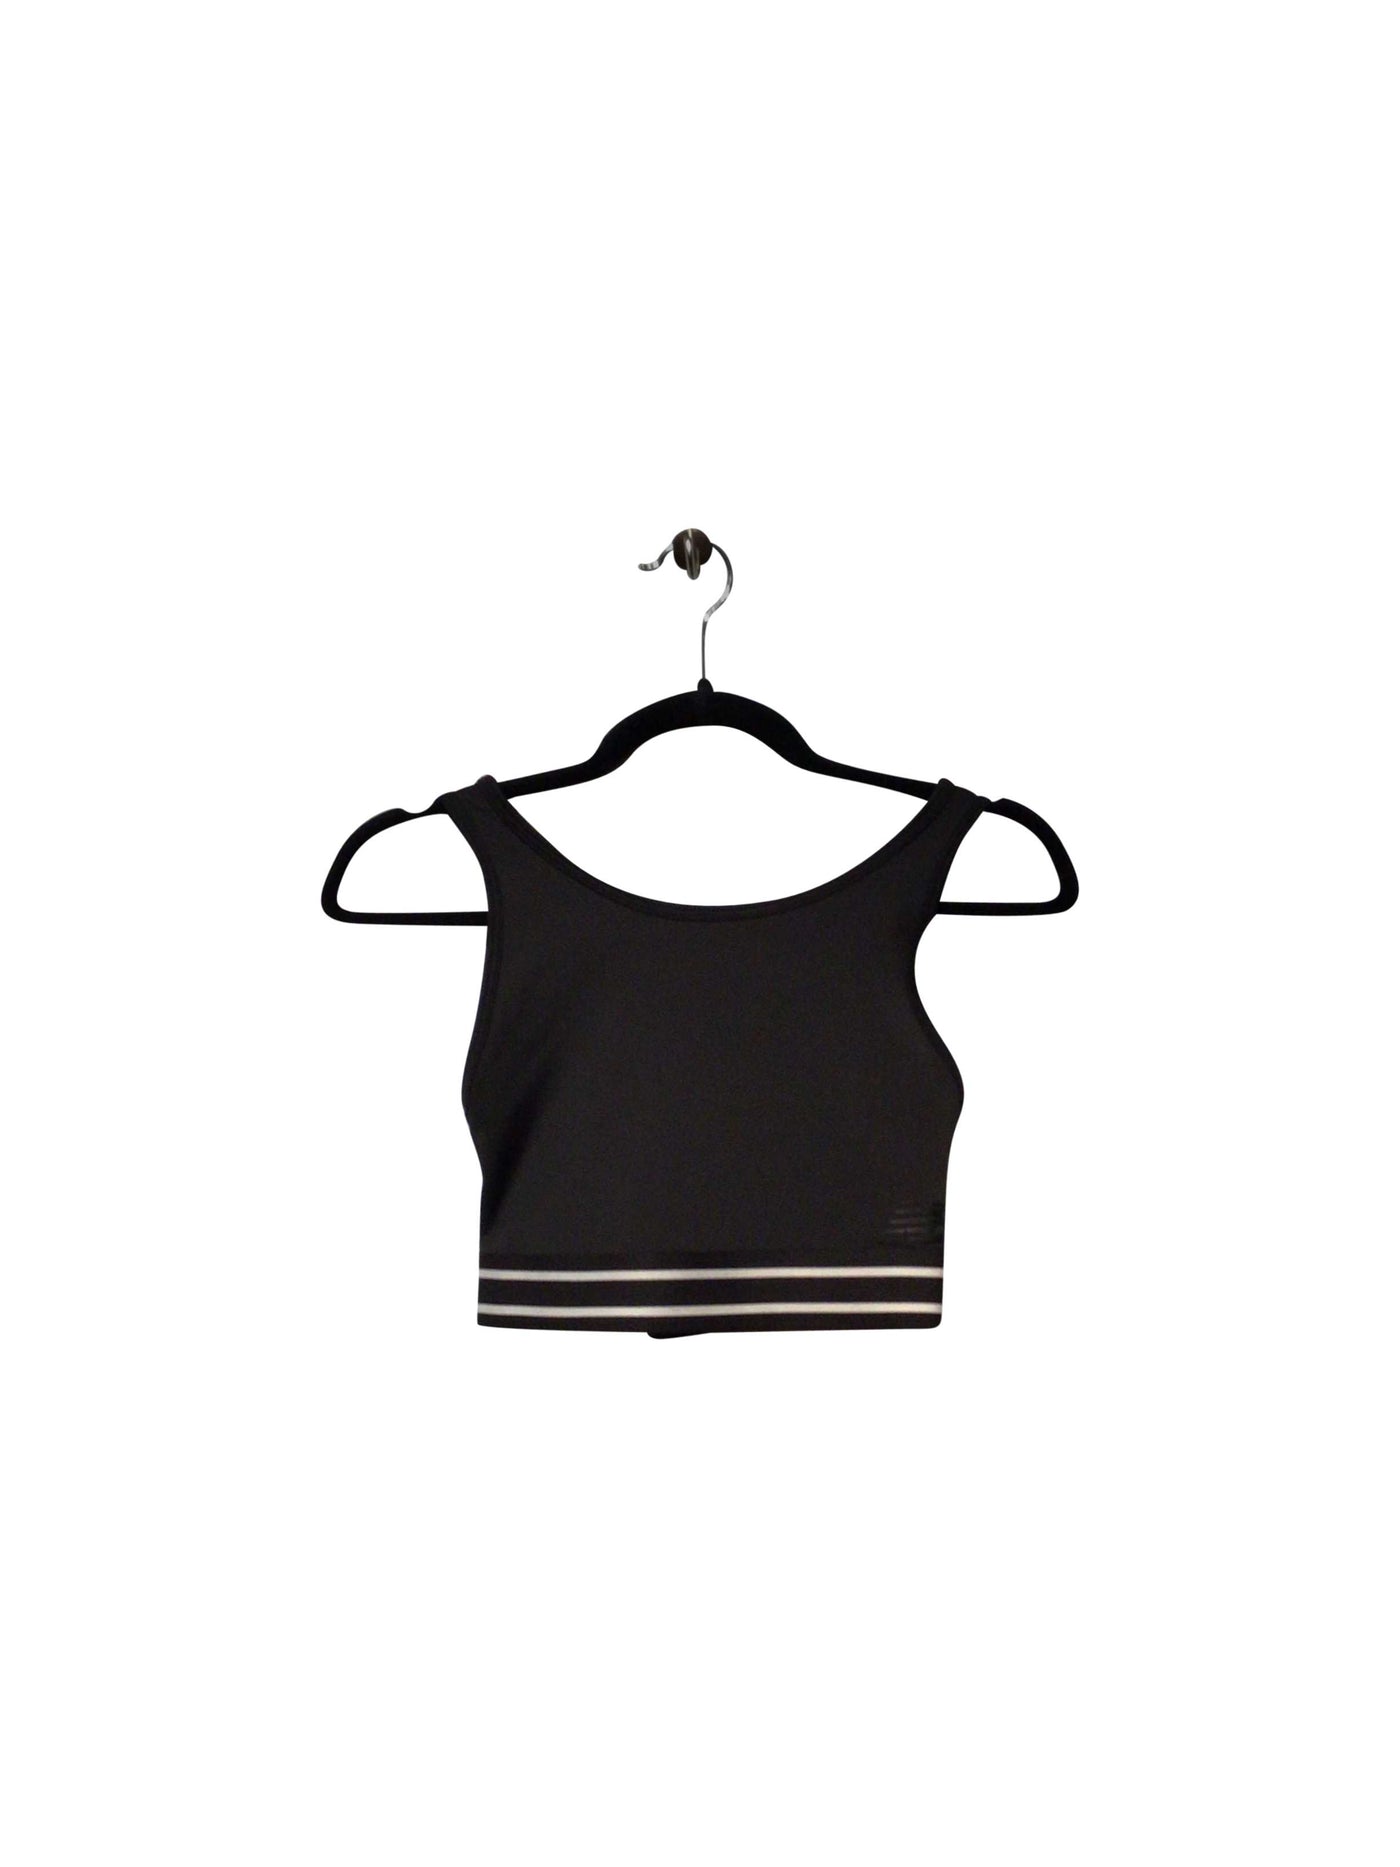 UNBRANDED Activewear Sport bra in Black  -  S  8.99 Koop